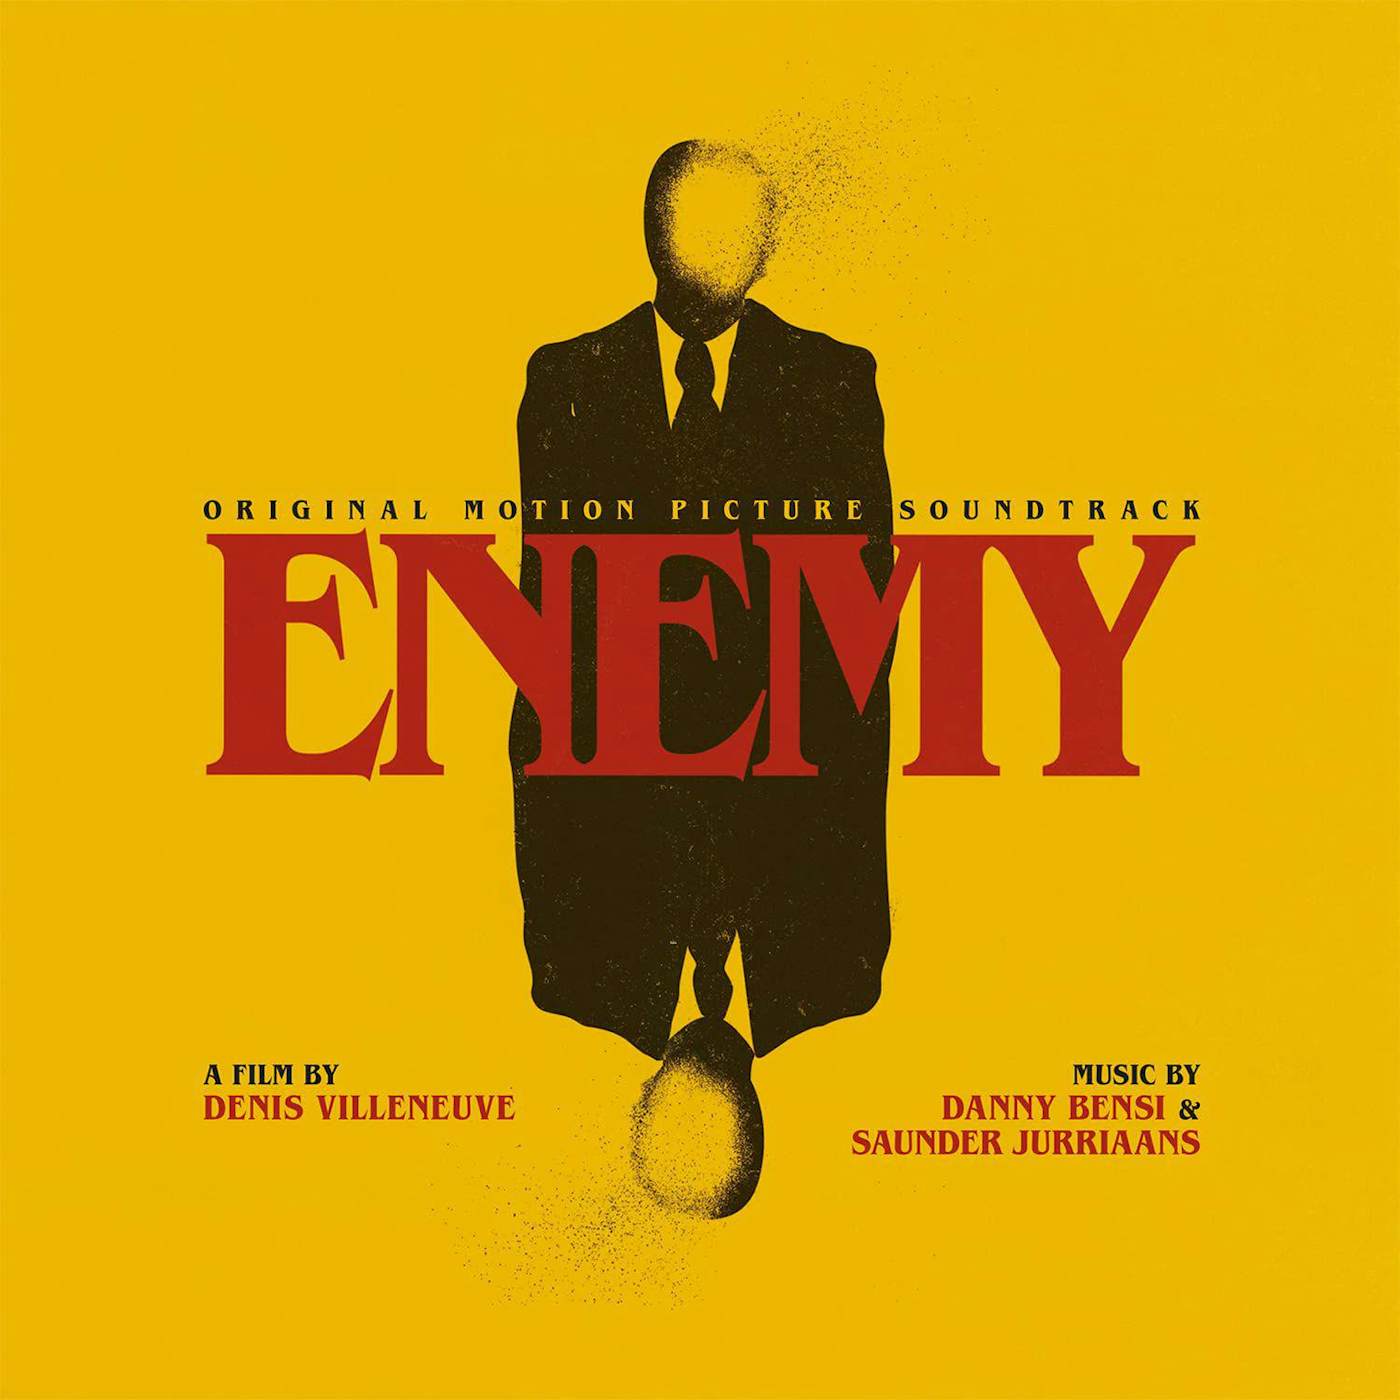 Danny Bensi and Saunder Jurriaans ENEMY Original Soundtrack (2LP/LIMITED/TRANSLUCENT YELLOW VINYL/180G) Vinyl Record